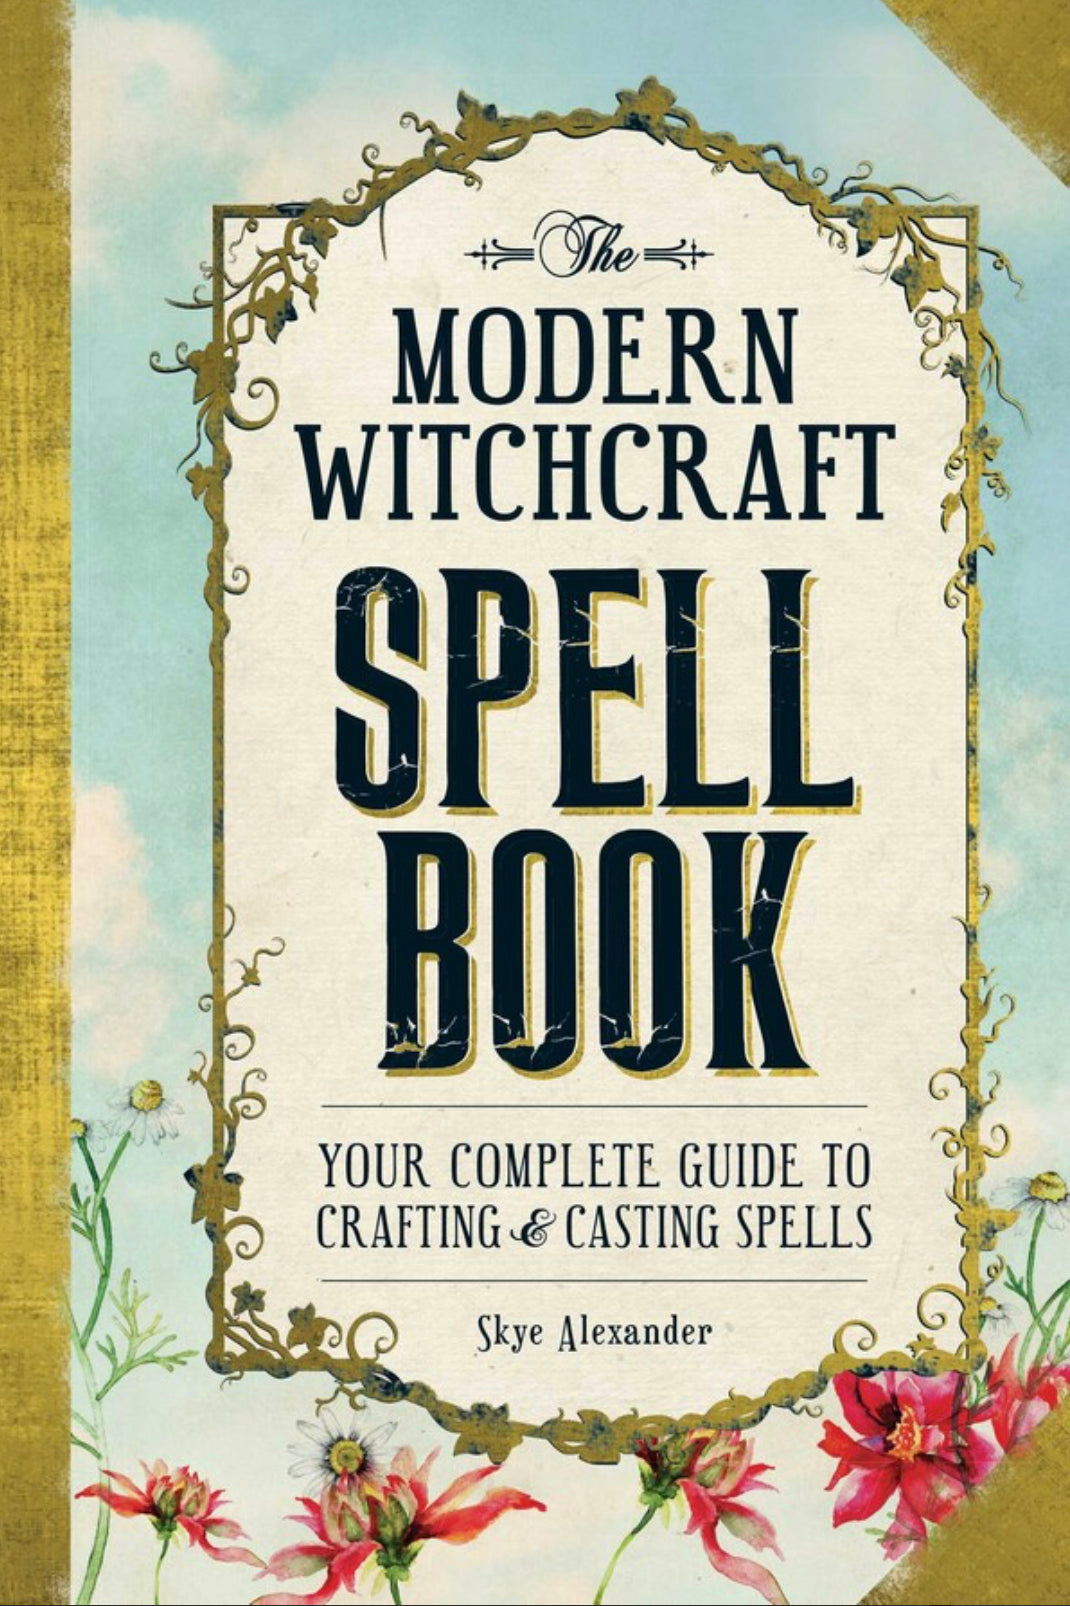 modern witchcraft spell book by Skye Alexander